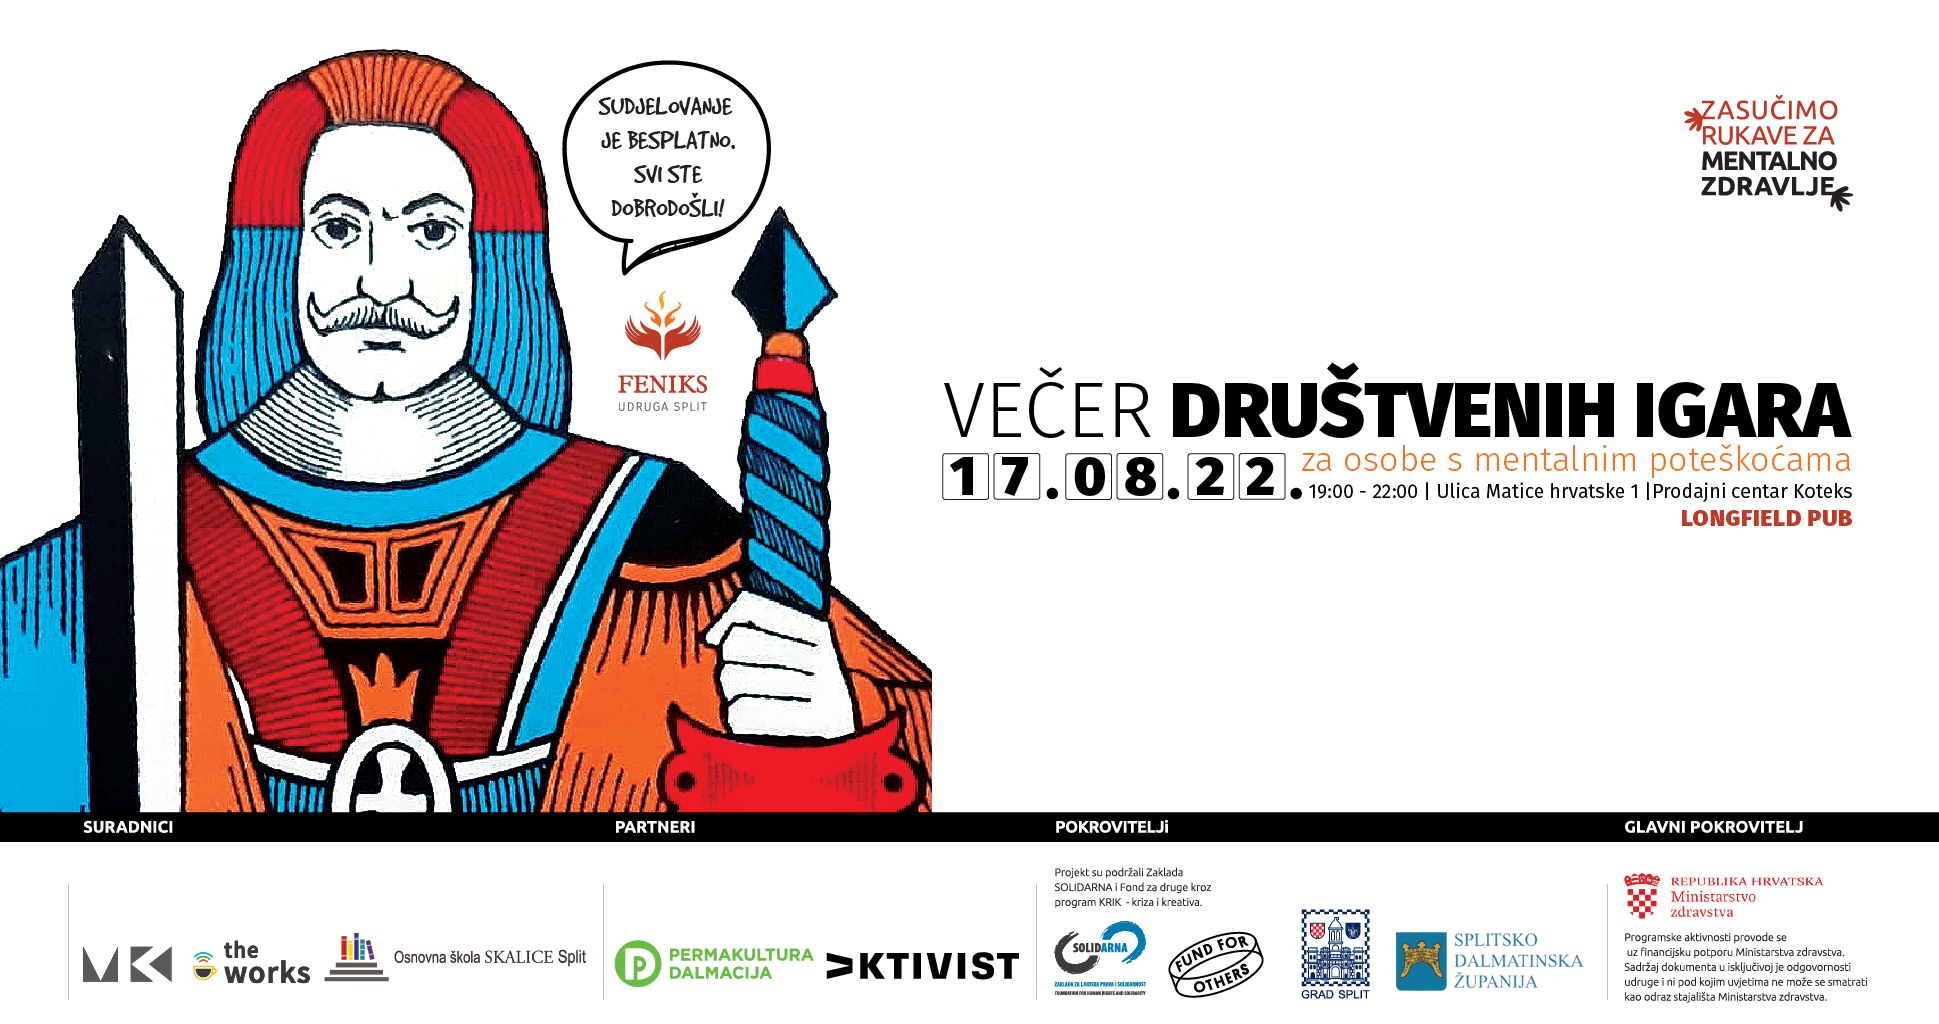 Vecer-drustvenih-igara-cover-event-170822